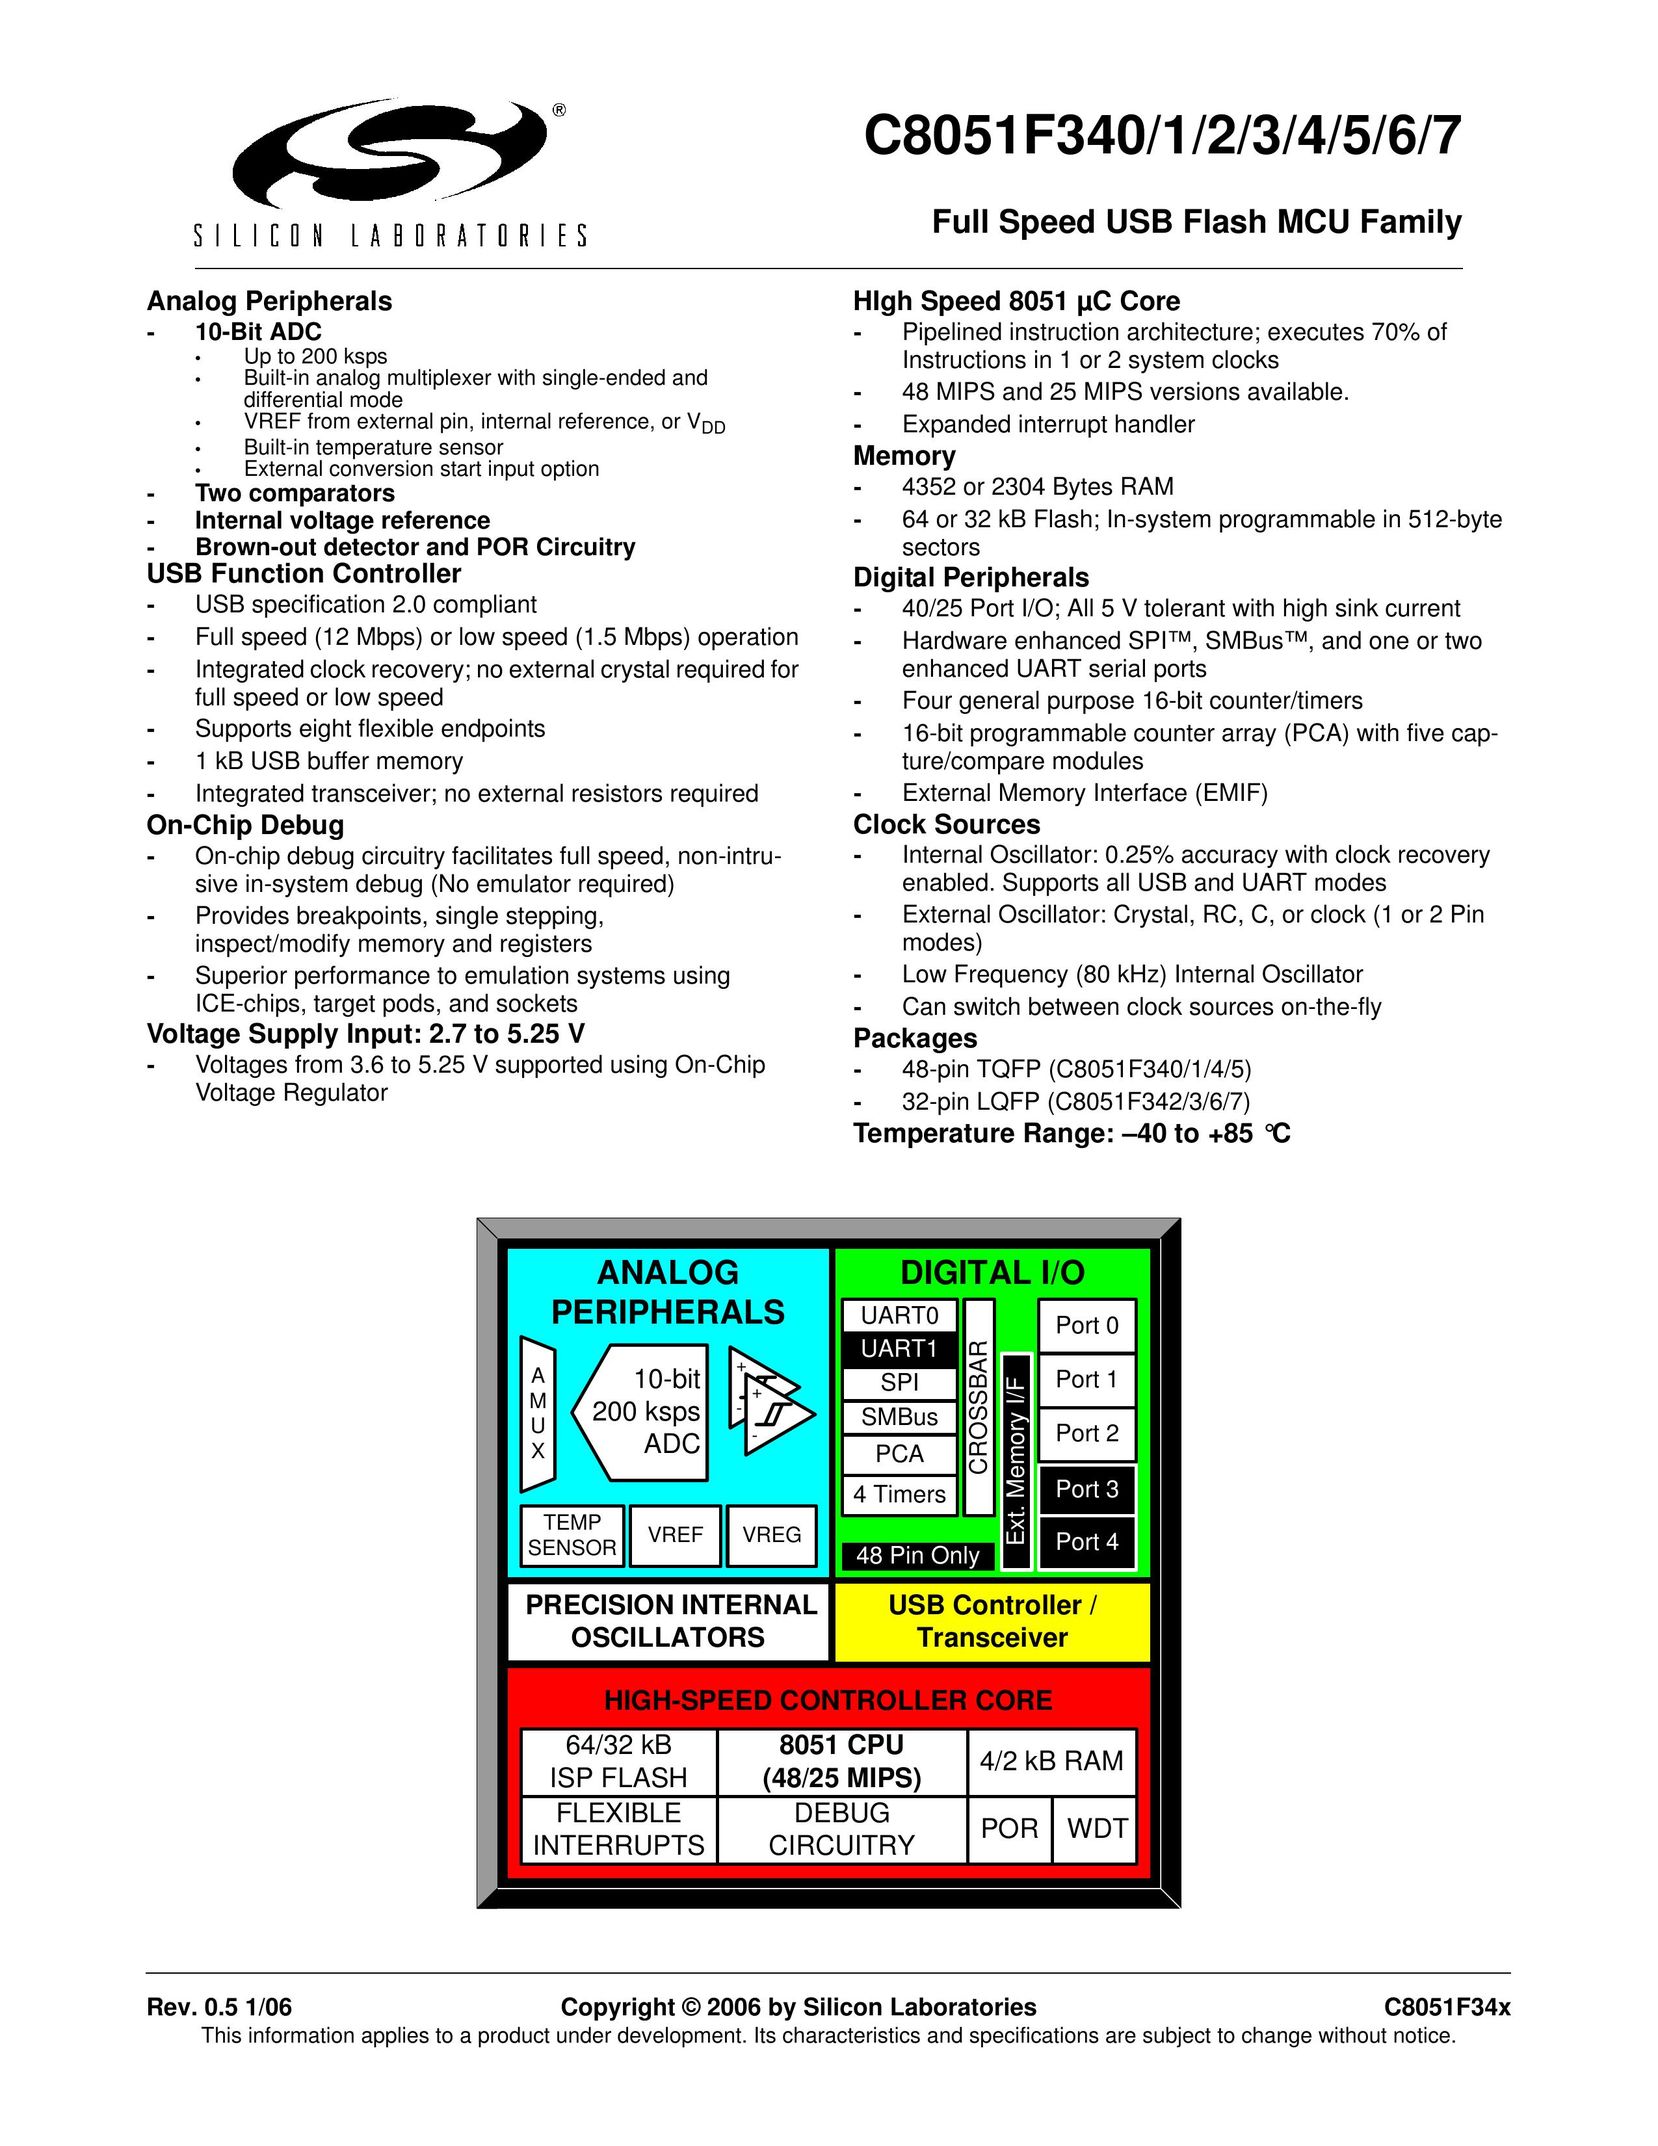 Silicon Laboratories C8051F343 Two-Way Radio User Manual